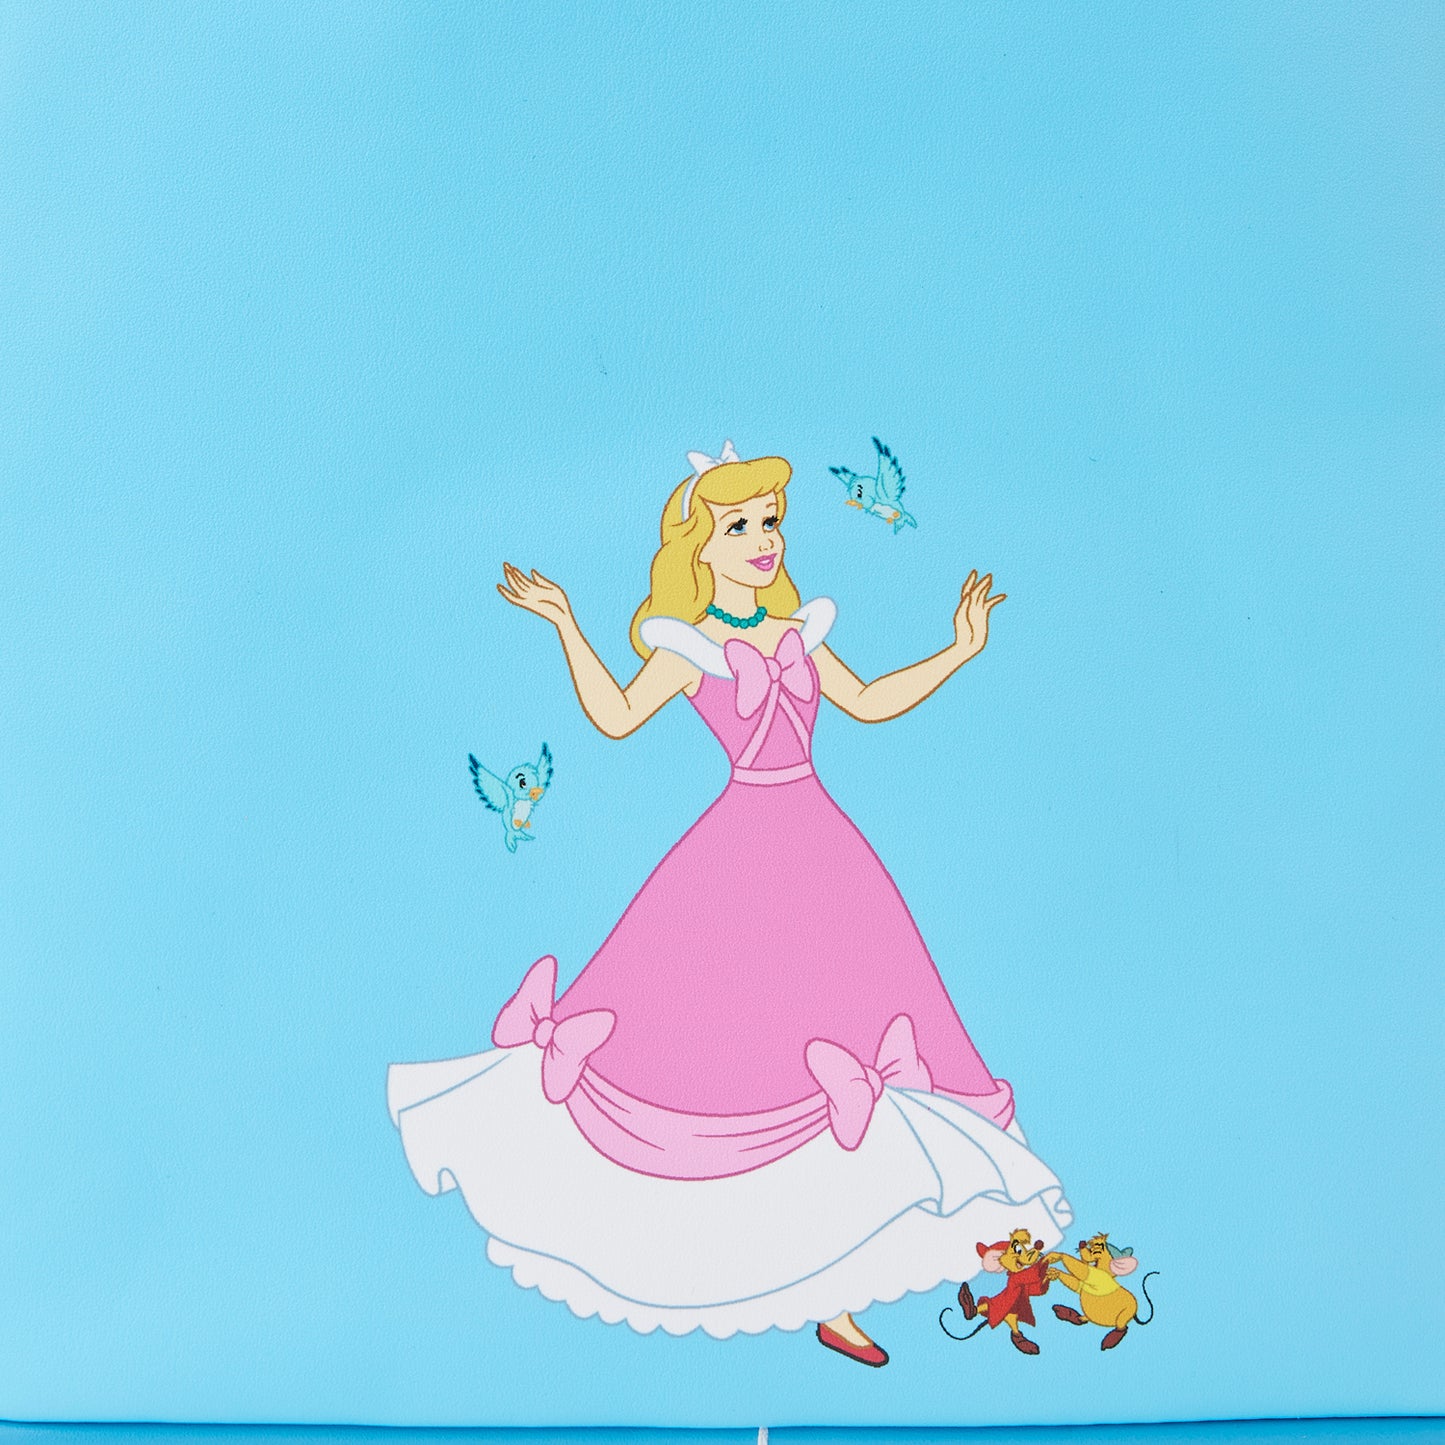 Cinderella Princess Lenticular Series Mini Backpack **PREORDER**